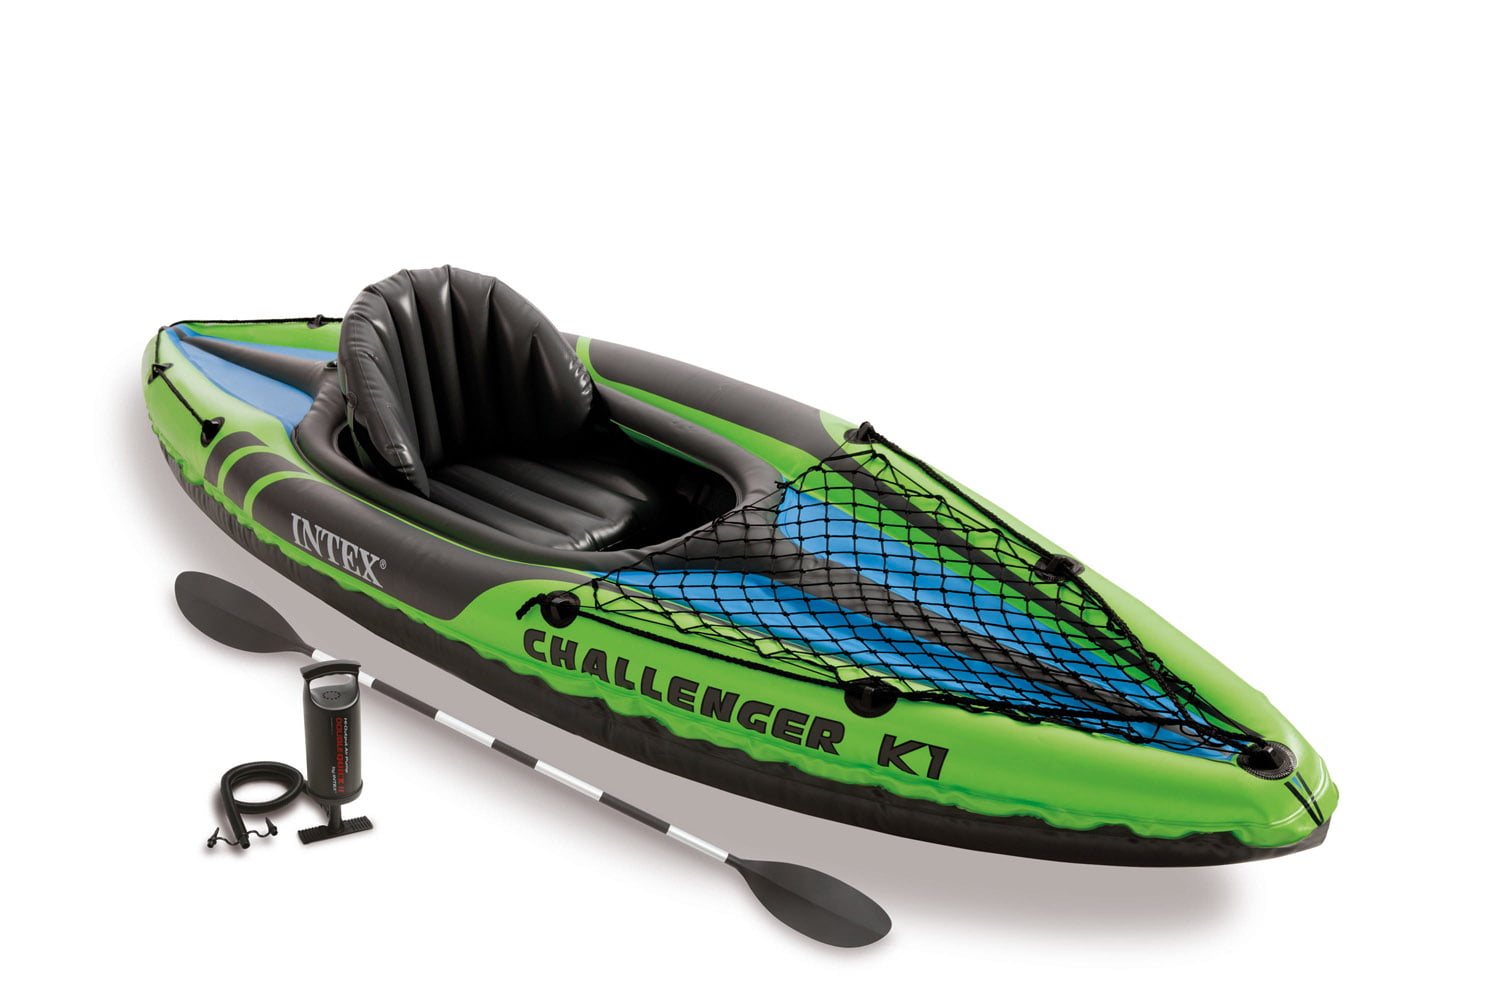 Intex Sports Challenger K1 Inflatable Kayak 1 Seat Floating Boat Oars River/Lake 